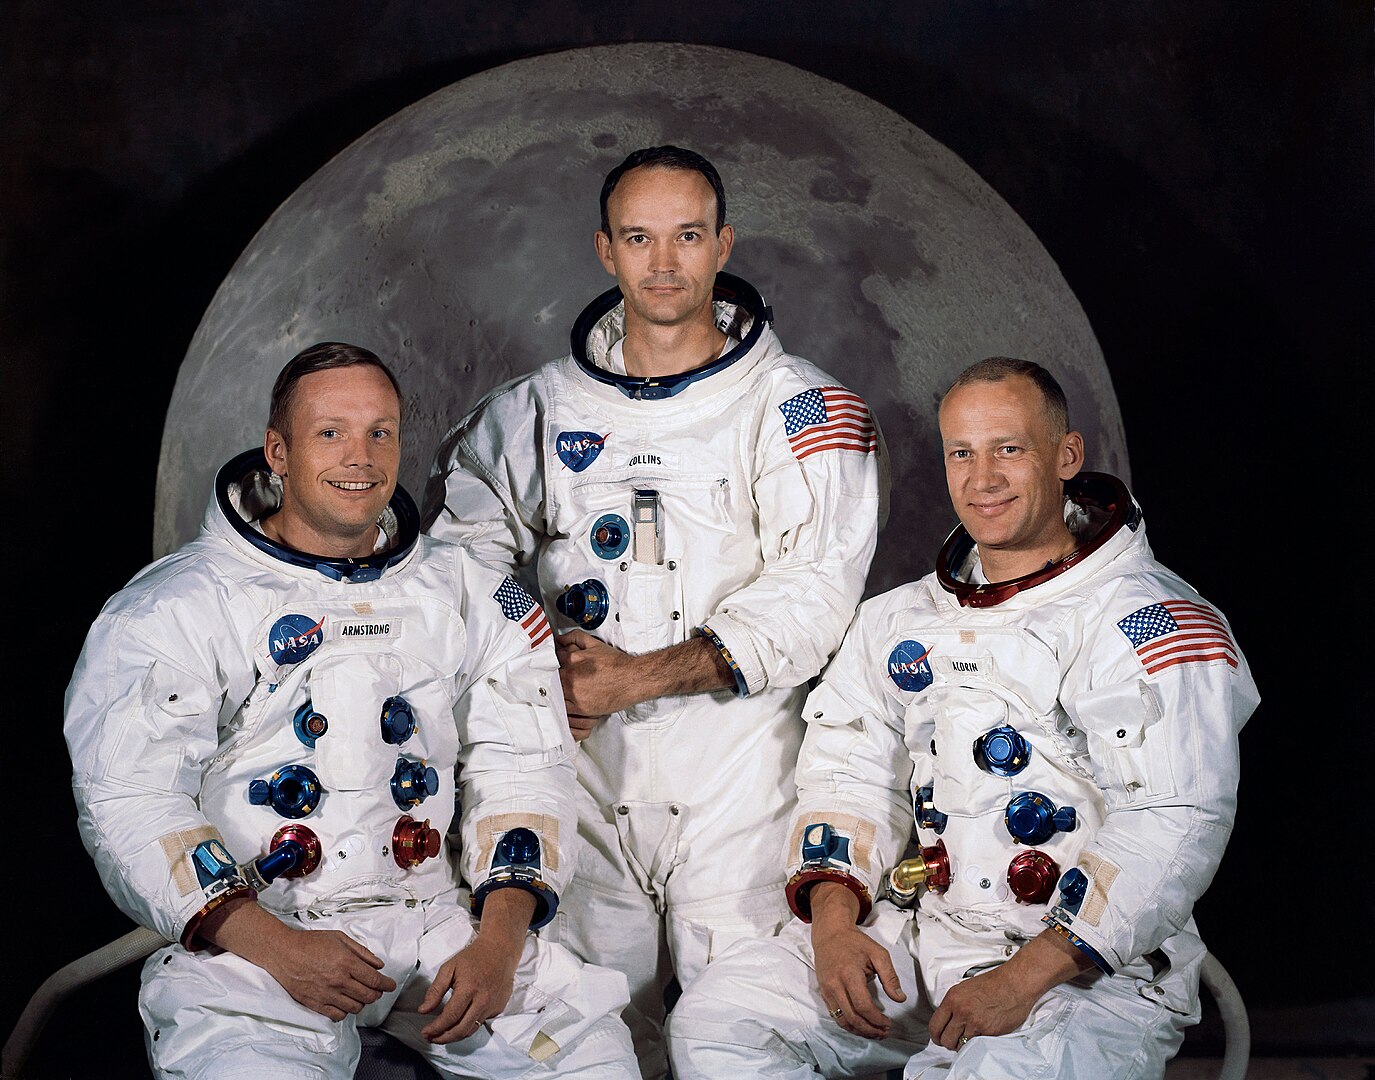 Слева направо: Нил Армстронг, Майкл Коллинз и Базз Олдрин. Фото: Авторство: NASA. NASA Human Space Flight Gallery, Общественное достояние, commons.wikimedia.org